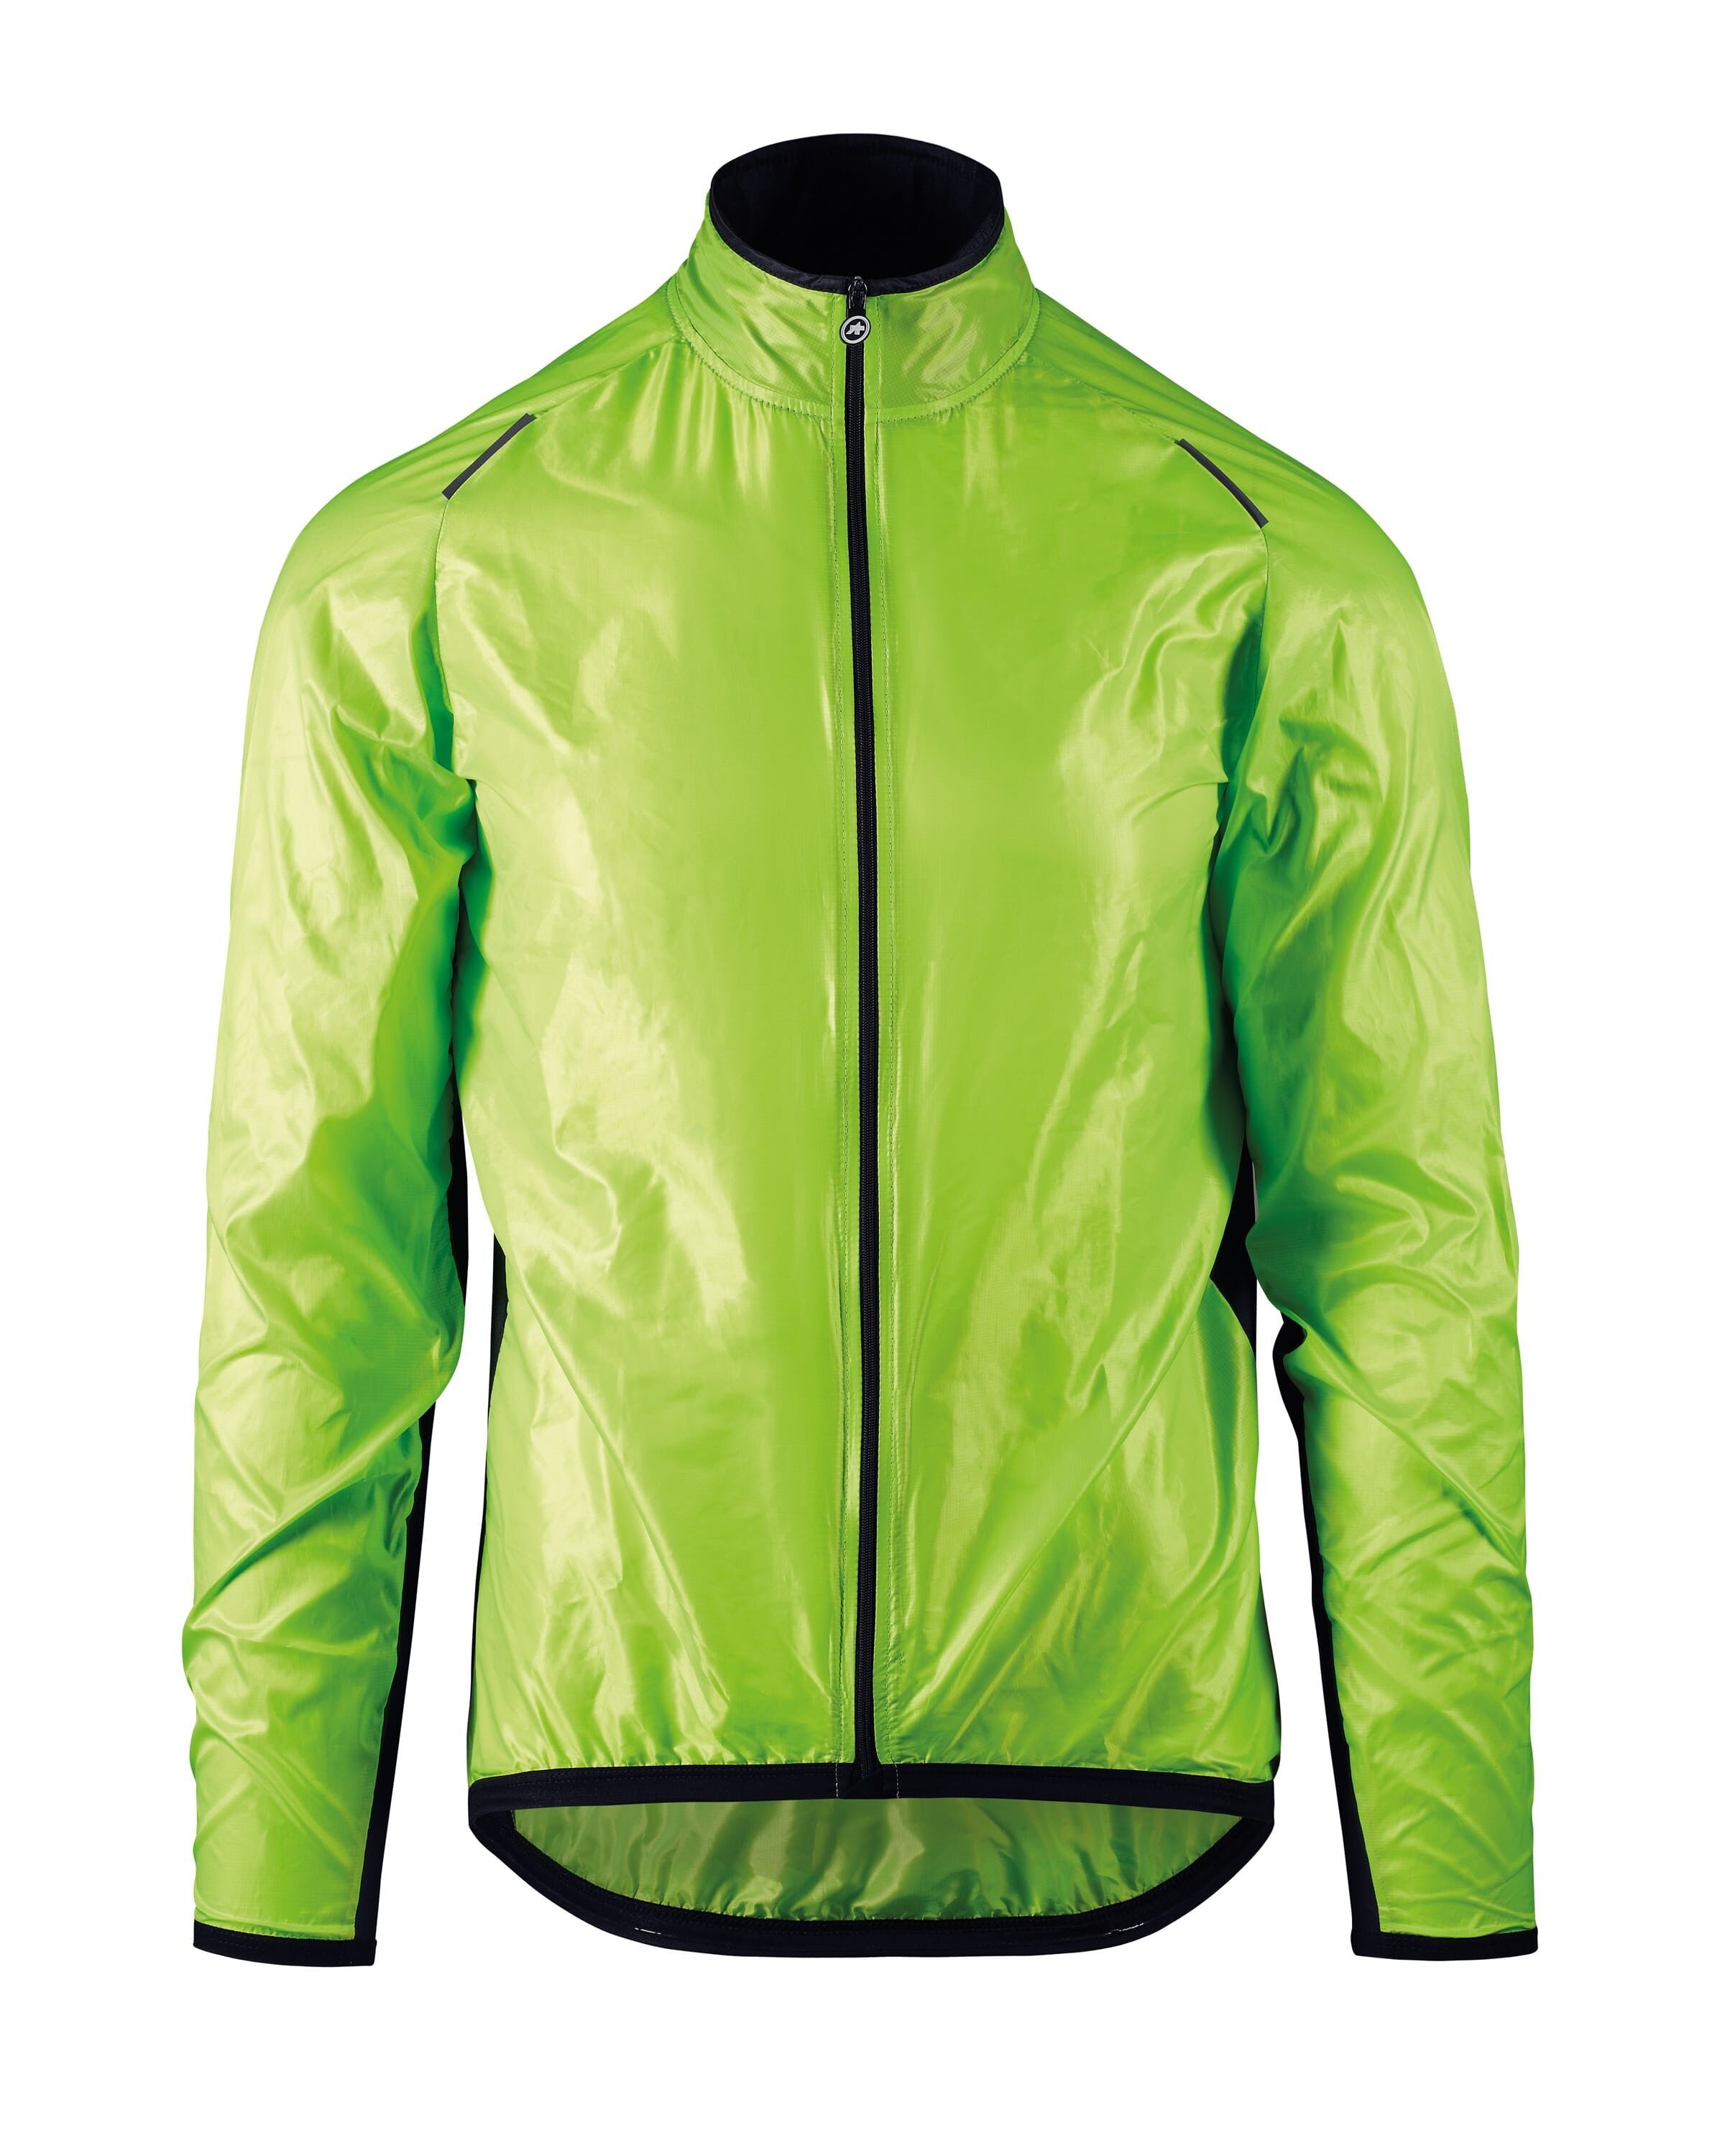 Assos Mille GT Wind Jacket - Cycling windproof jacket - Men's